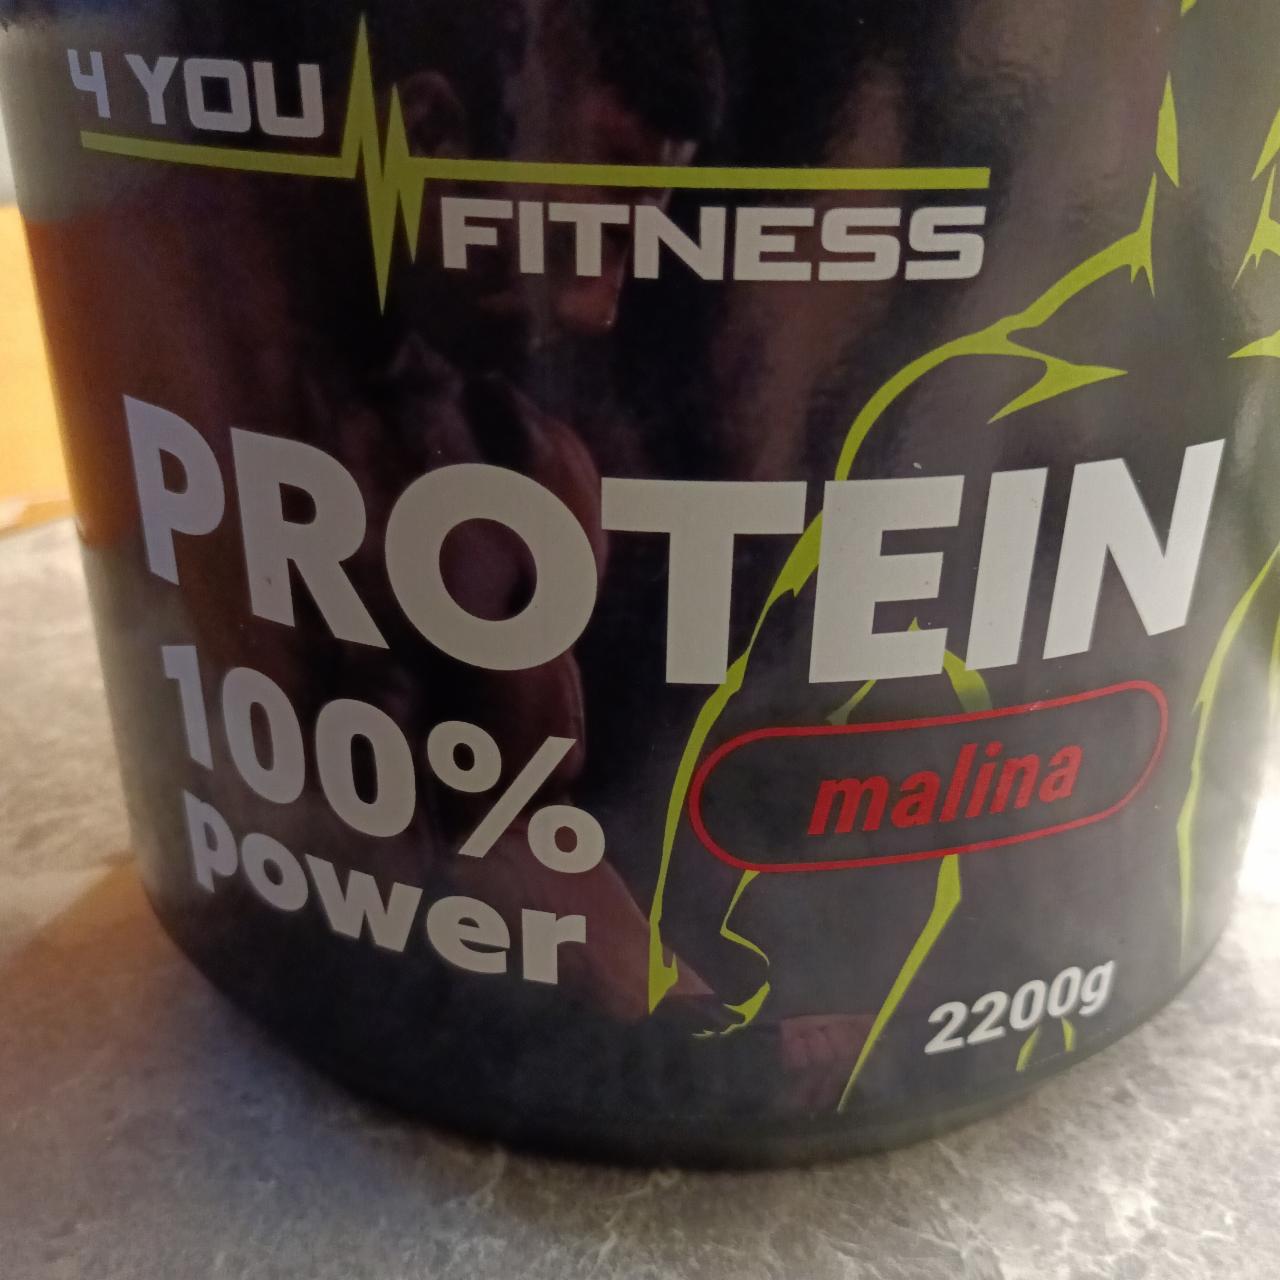 Fotografie - Protein 100% power Malina 4 You Fitness